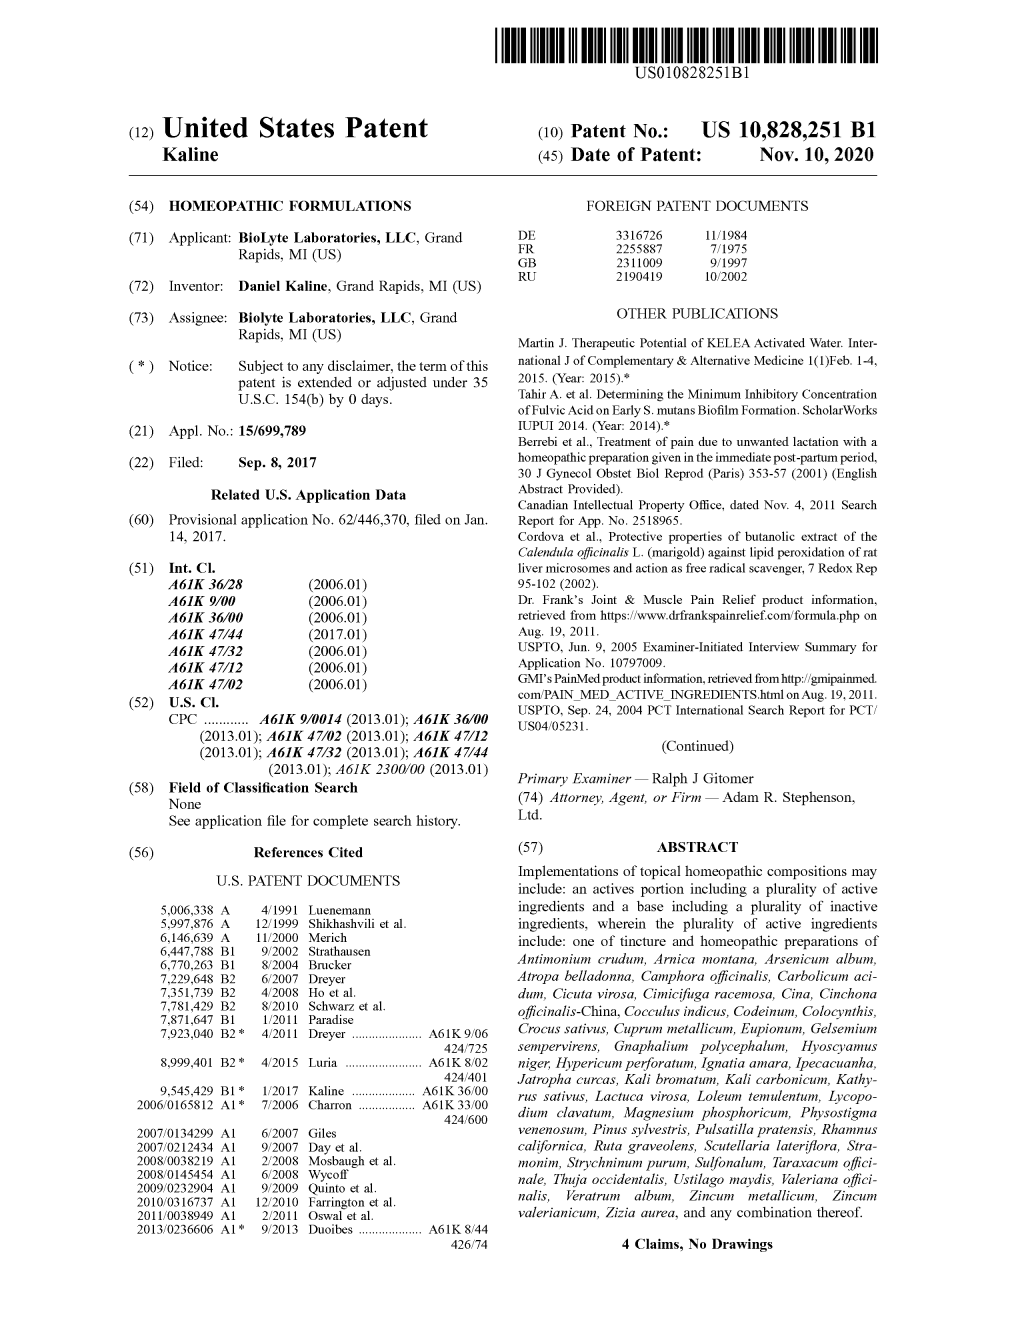 ( 12 ) United States Patent ( 10 ) Patent No .: US 10,828,251 B1 Kaline (45 ) Date of Patent : Nov